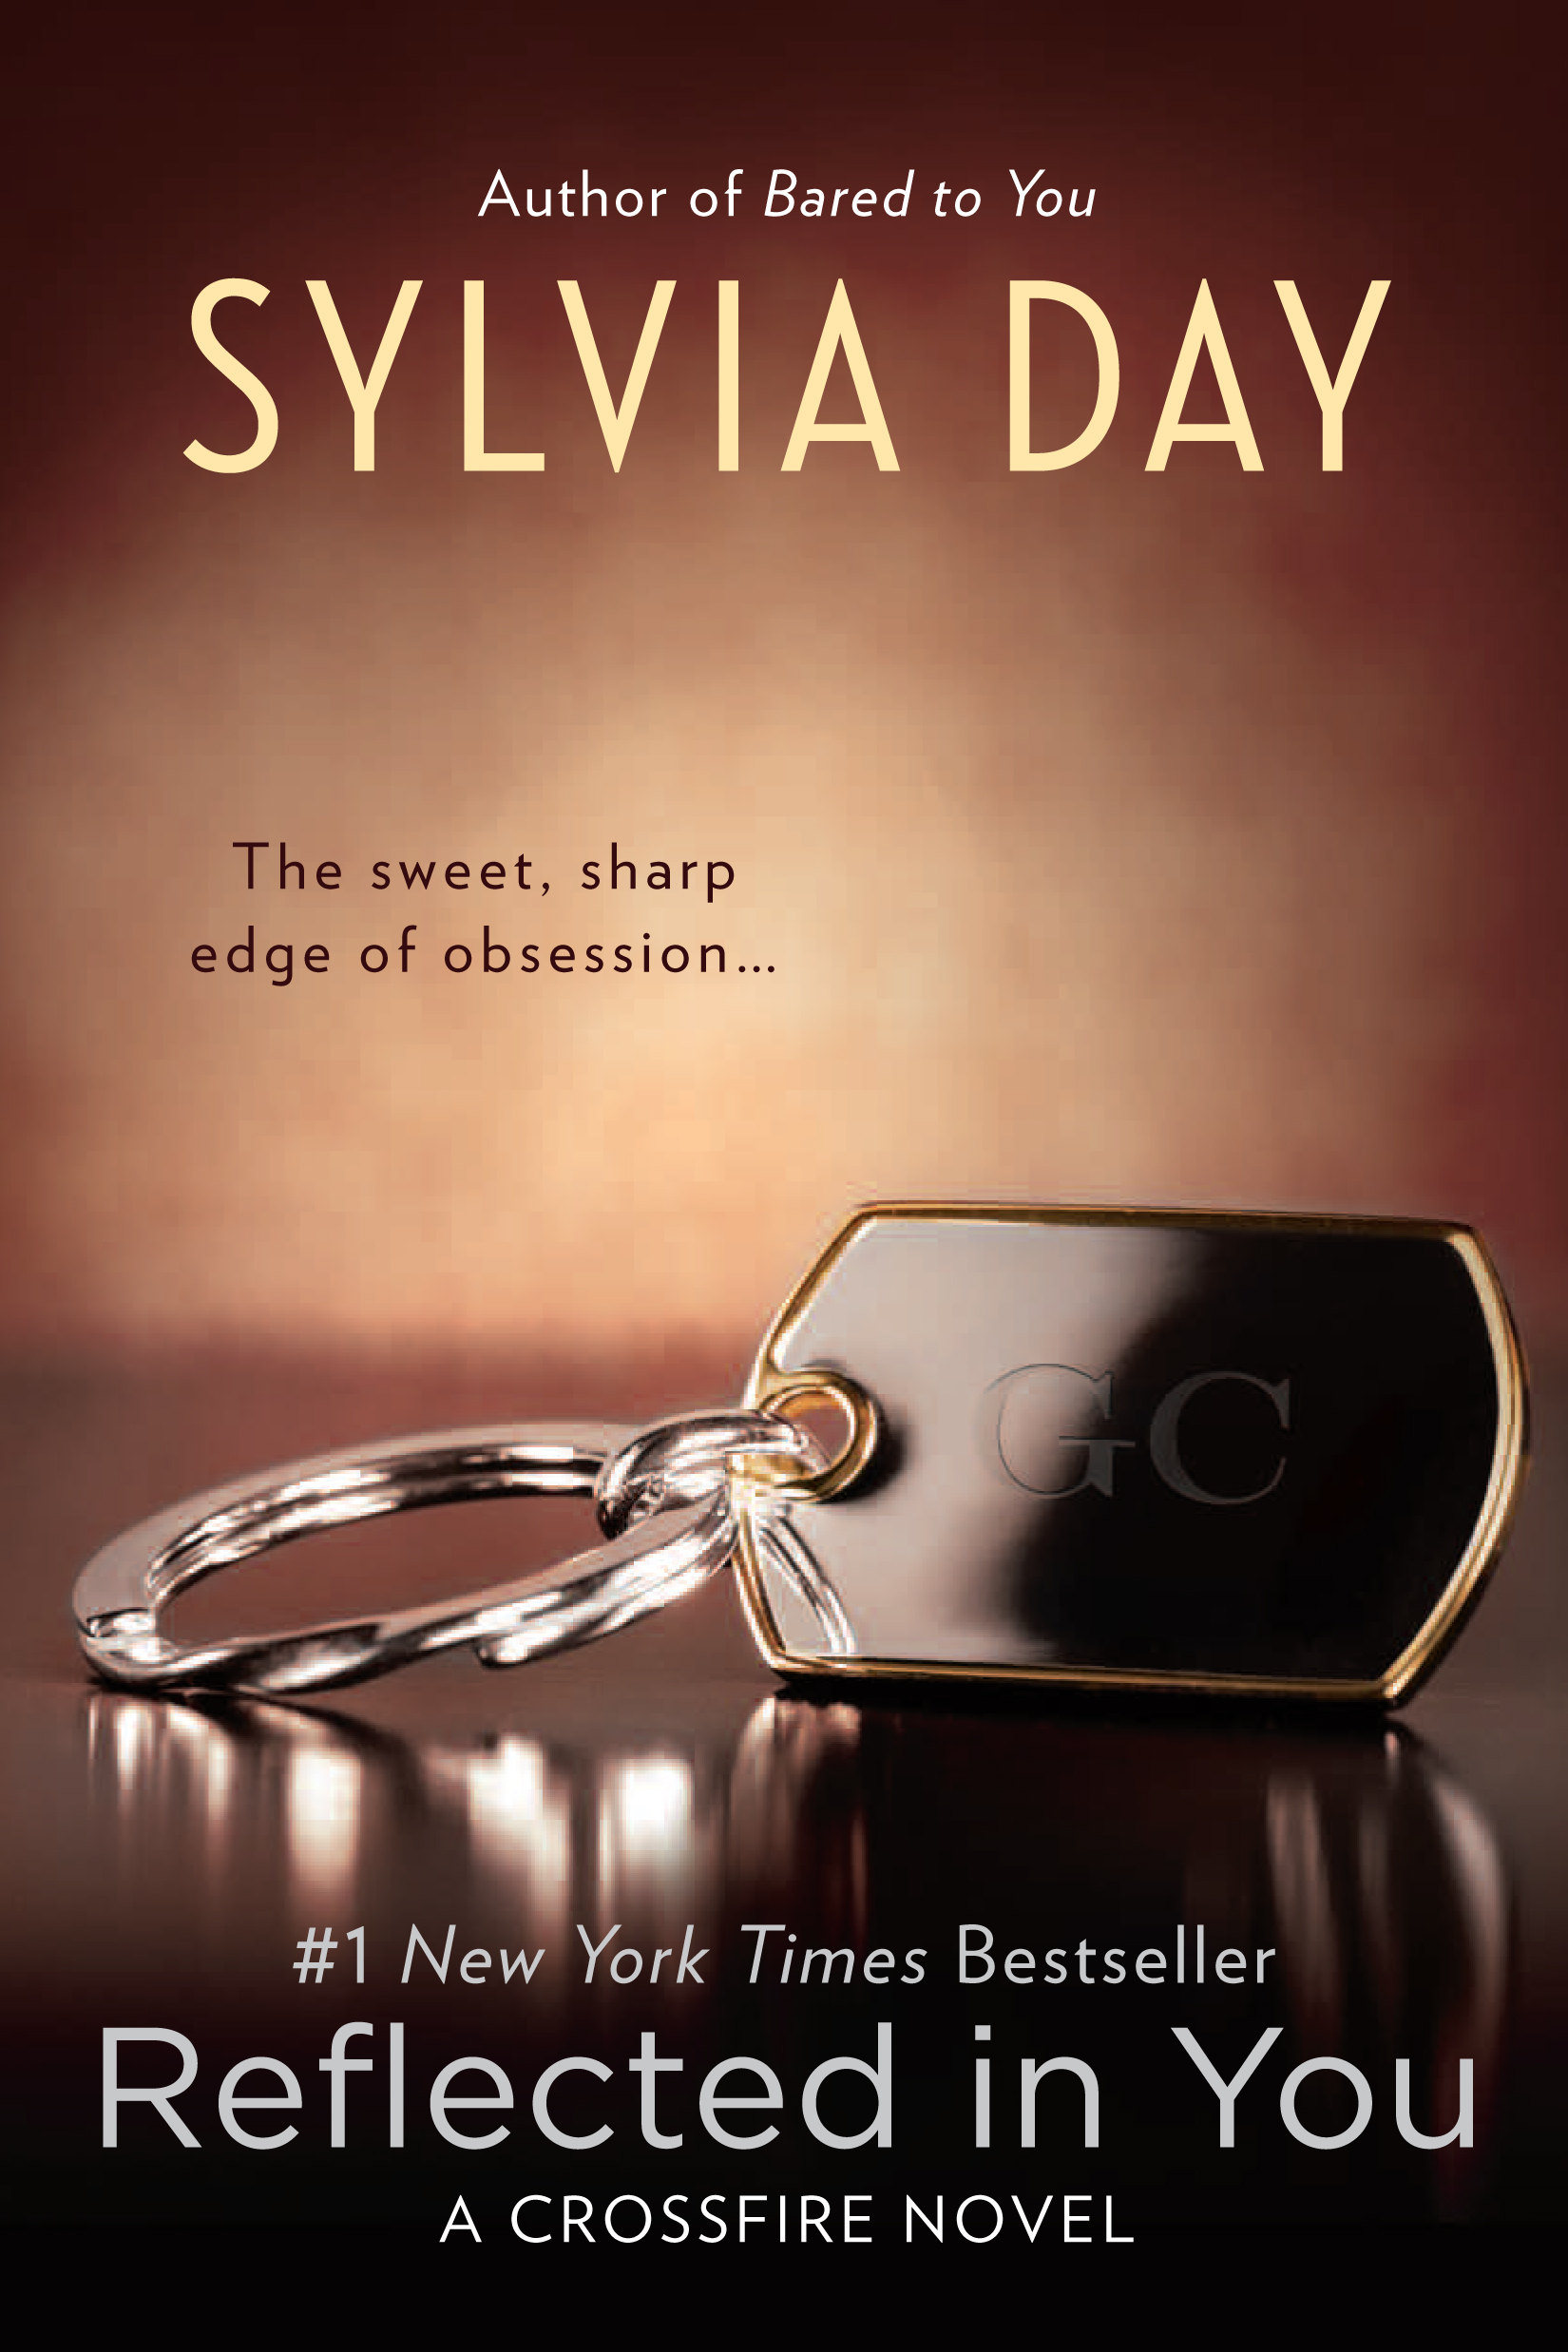 sylvia day books crossfire series